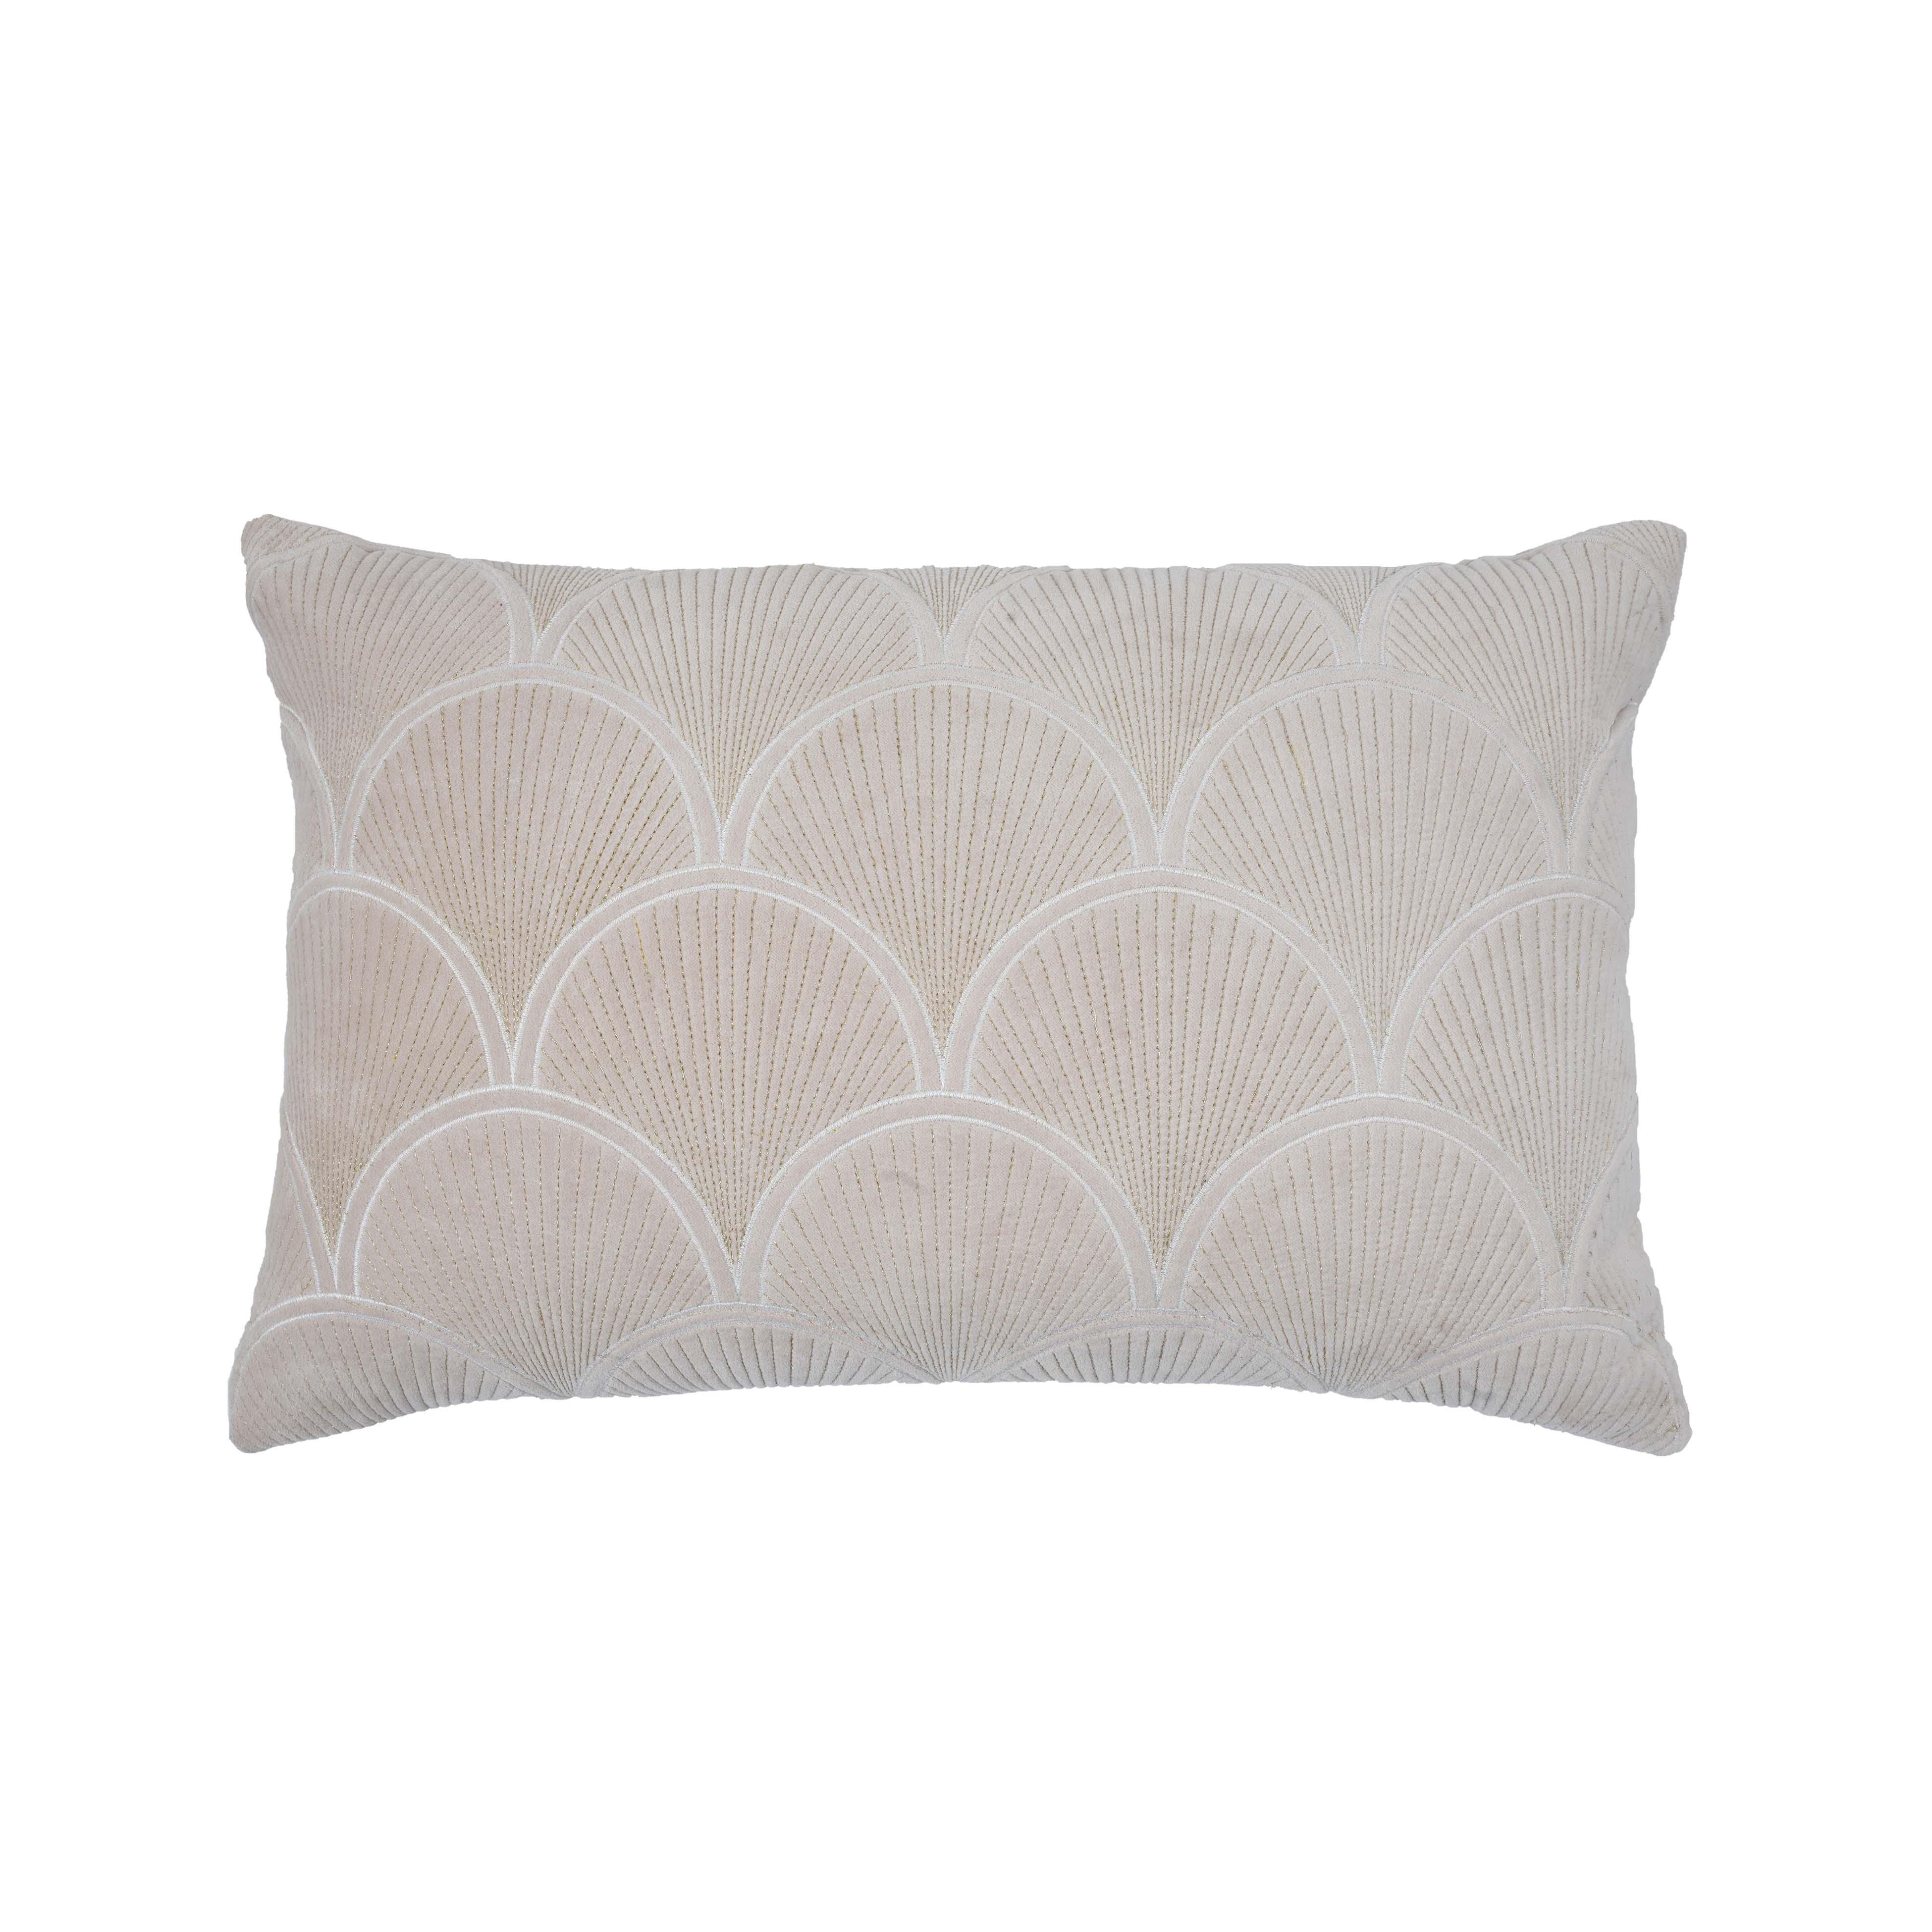 Tov Furniture Pillows - Destiny White Woven Cushion